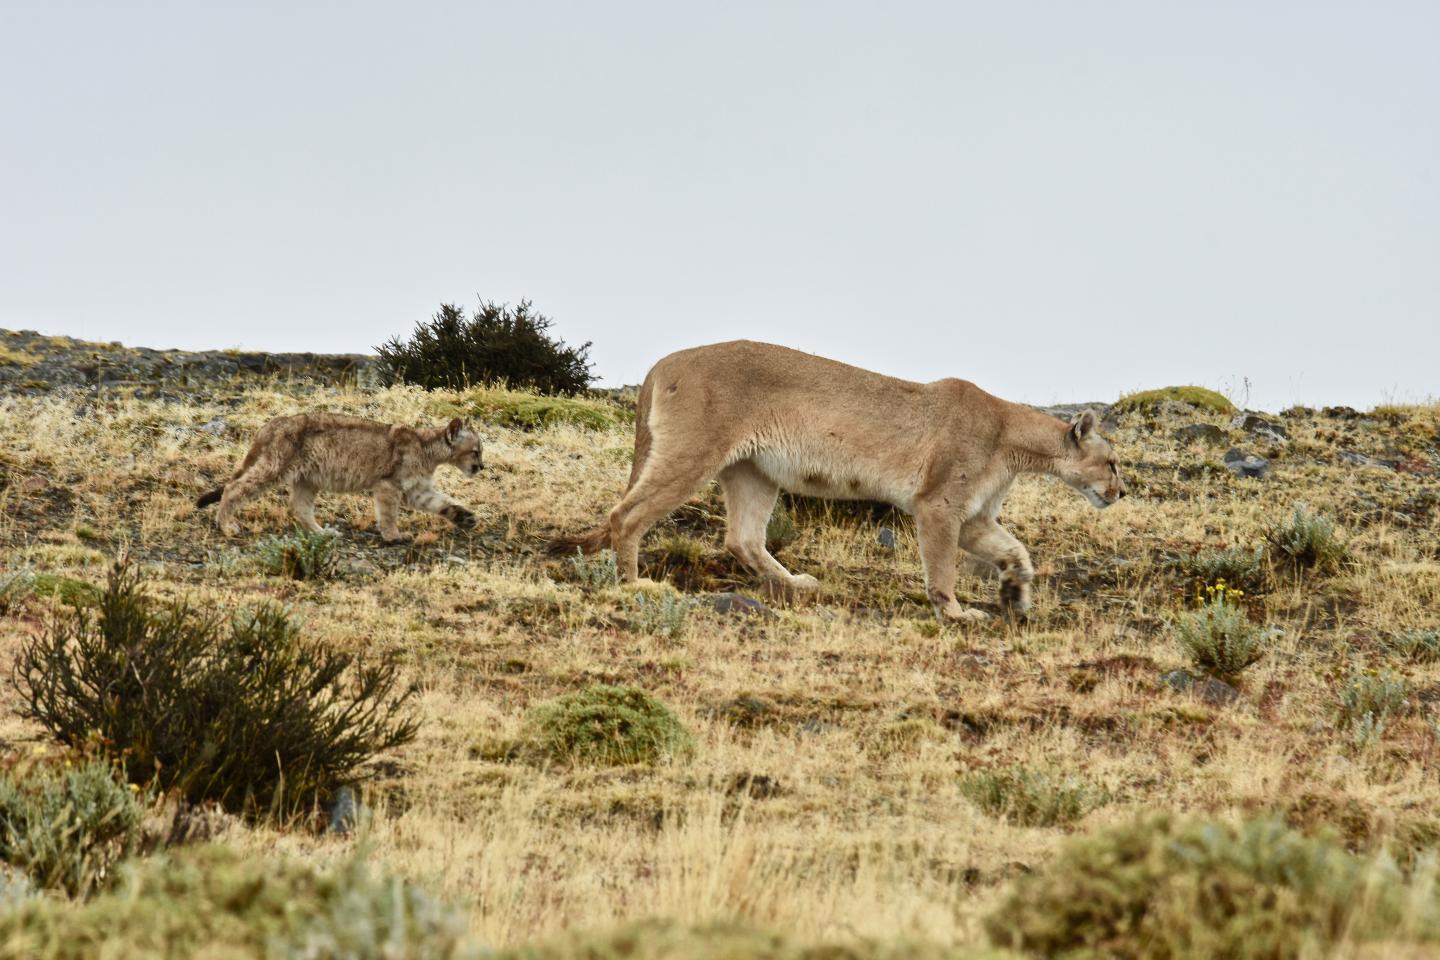 Puma on Patagonian landscape